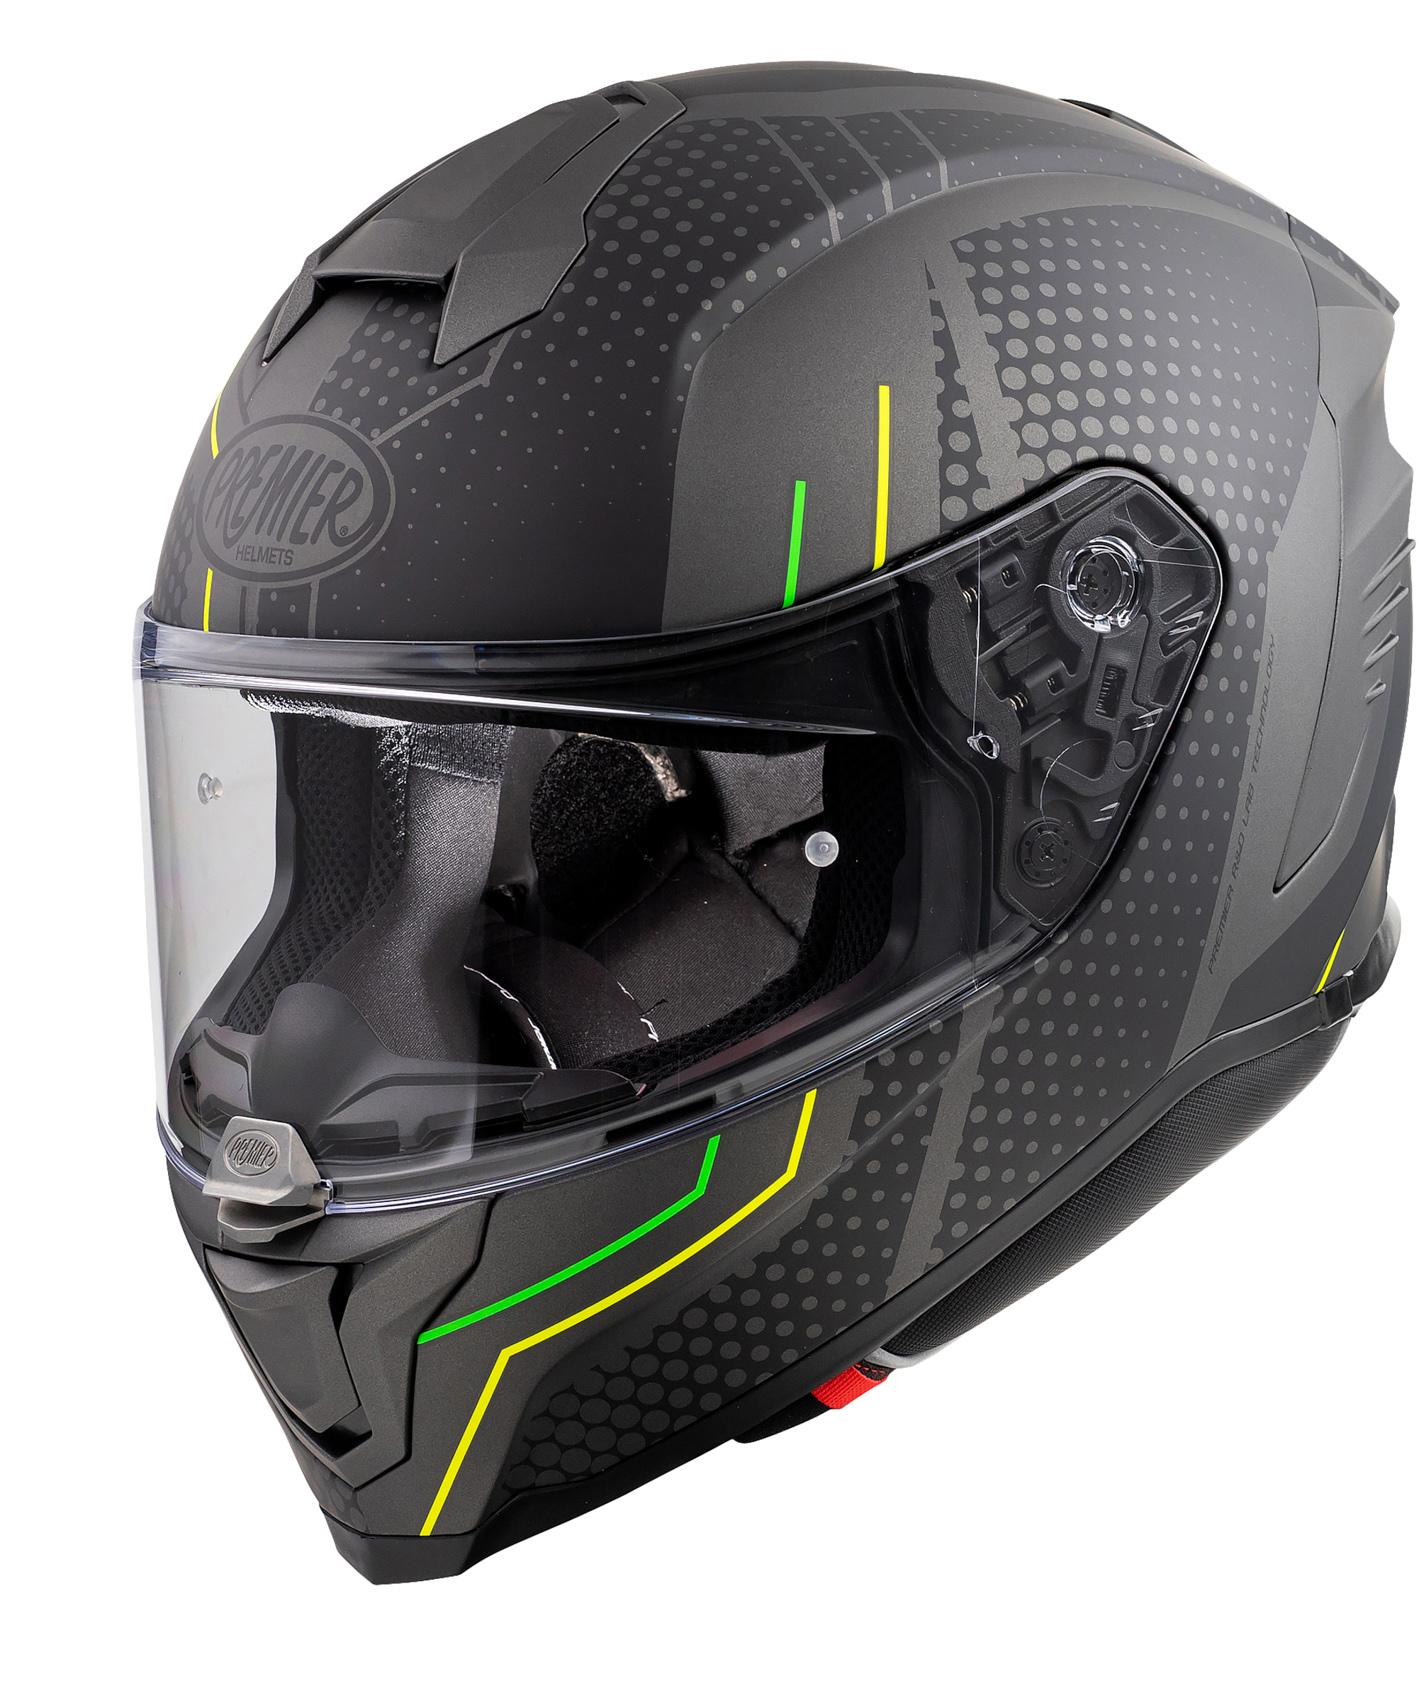 Premier Hyper Bp Full Face Motorcycle Helmet - Black/Gunmetal, M